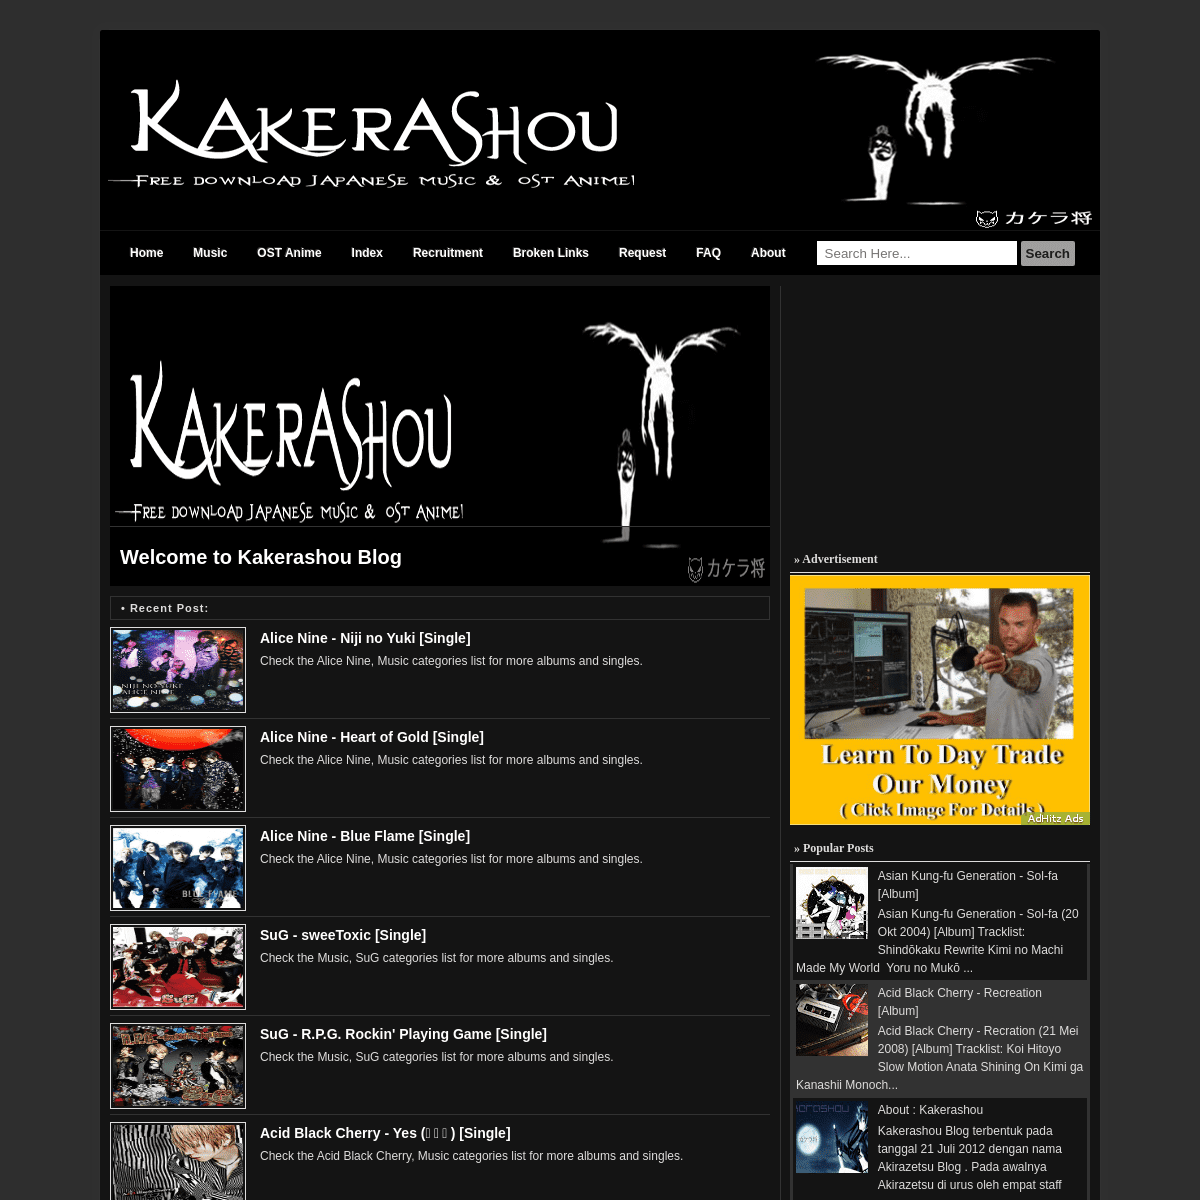 A complete backup of kakerashou.blogspot.com